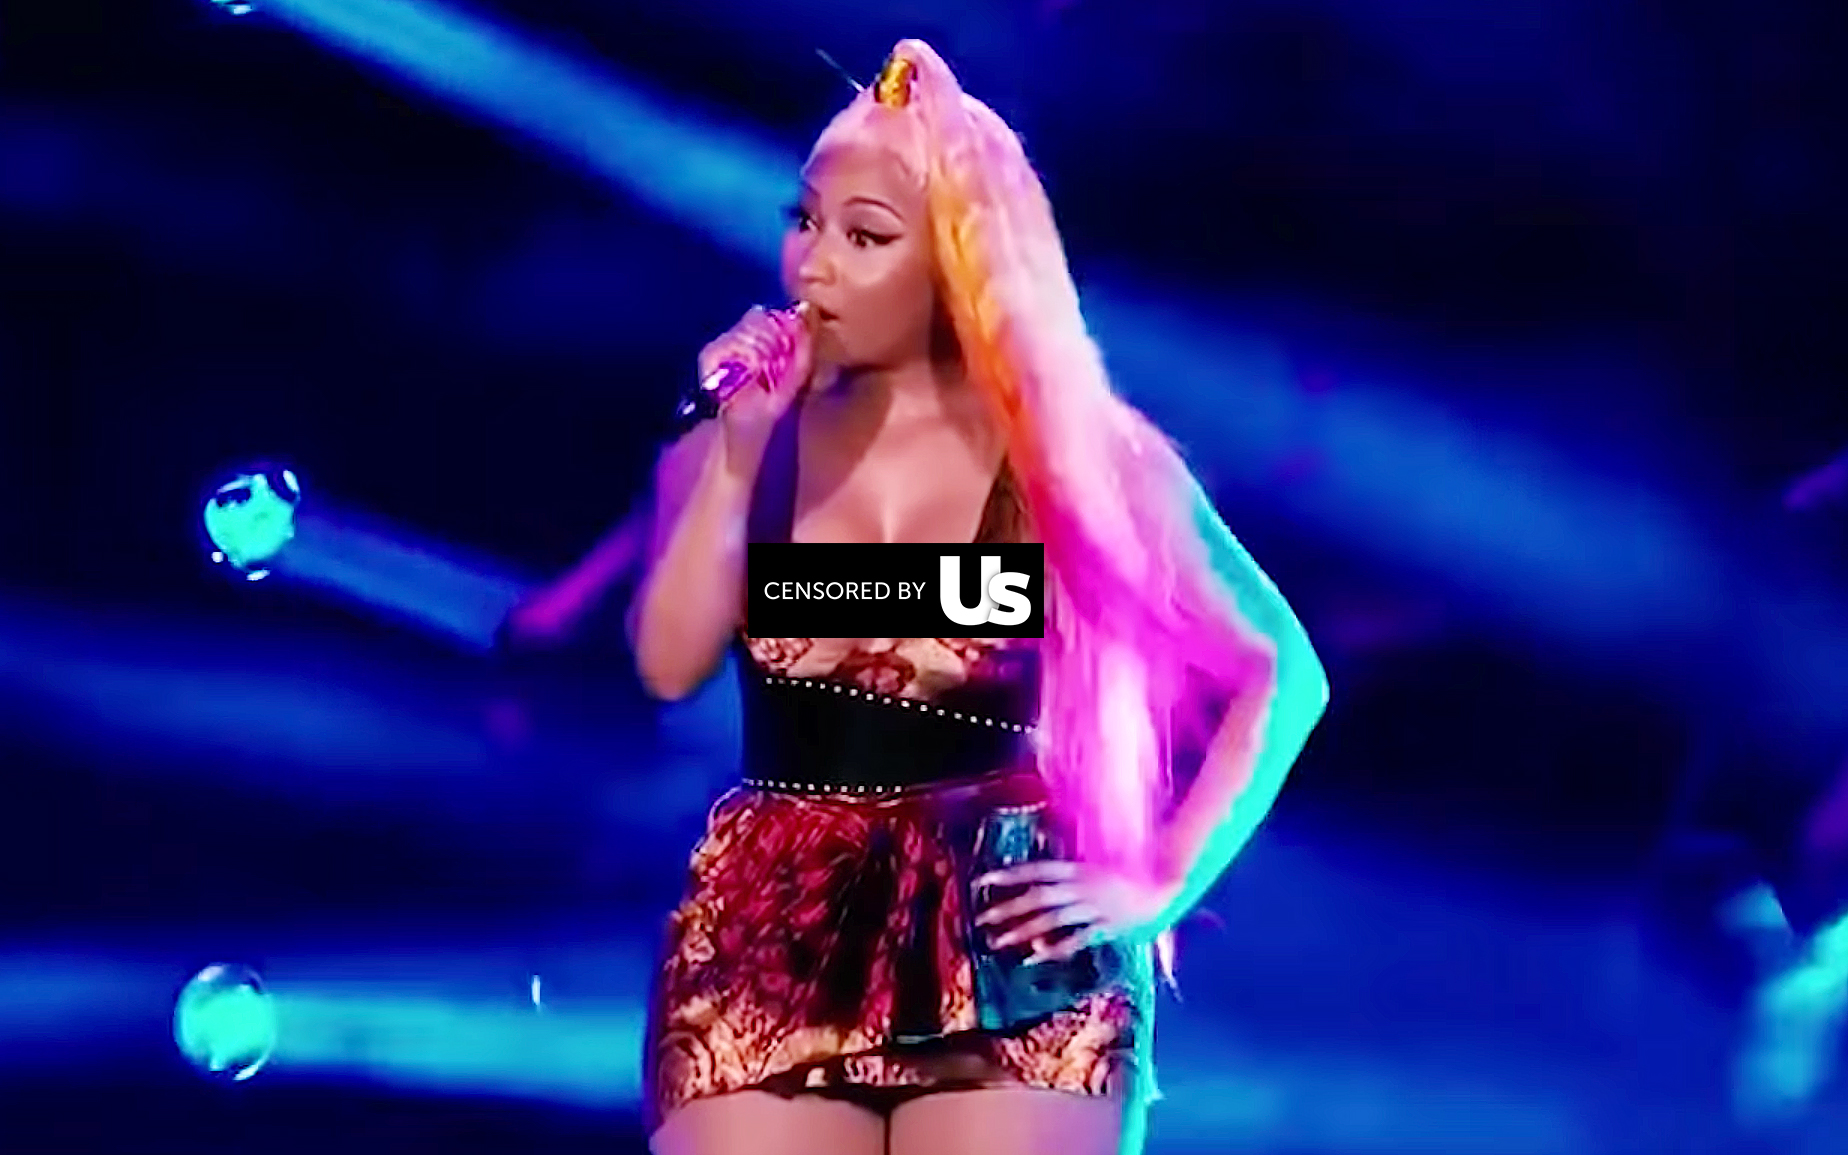 Nicki Minaj has insisted that her infamous nip slip in August 2011